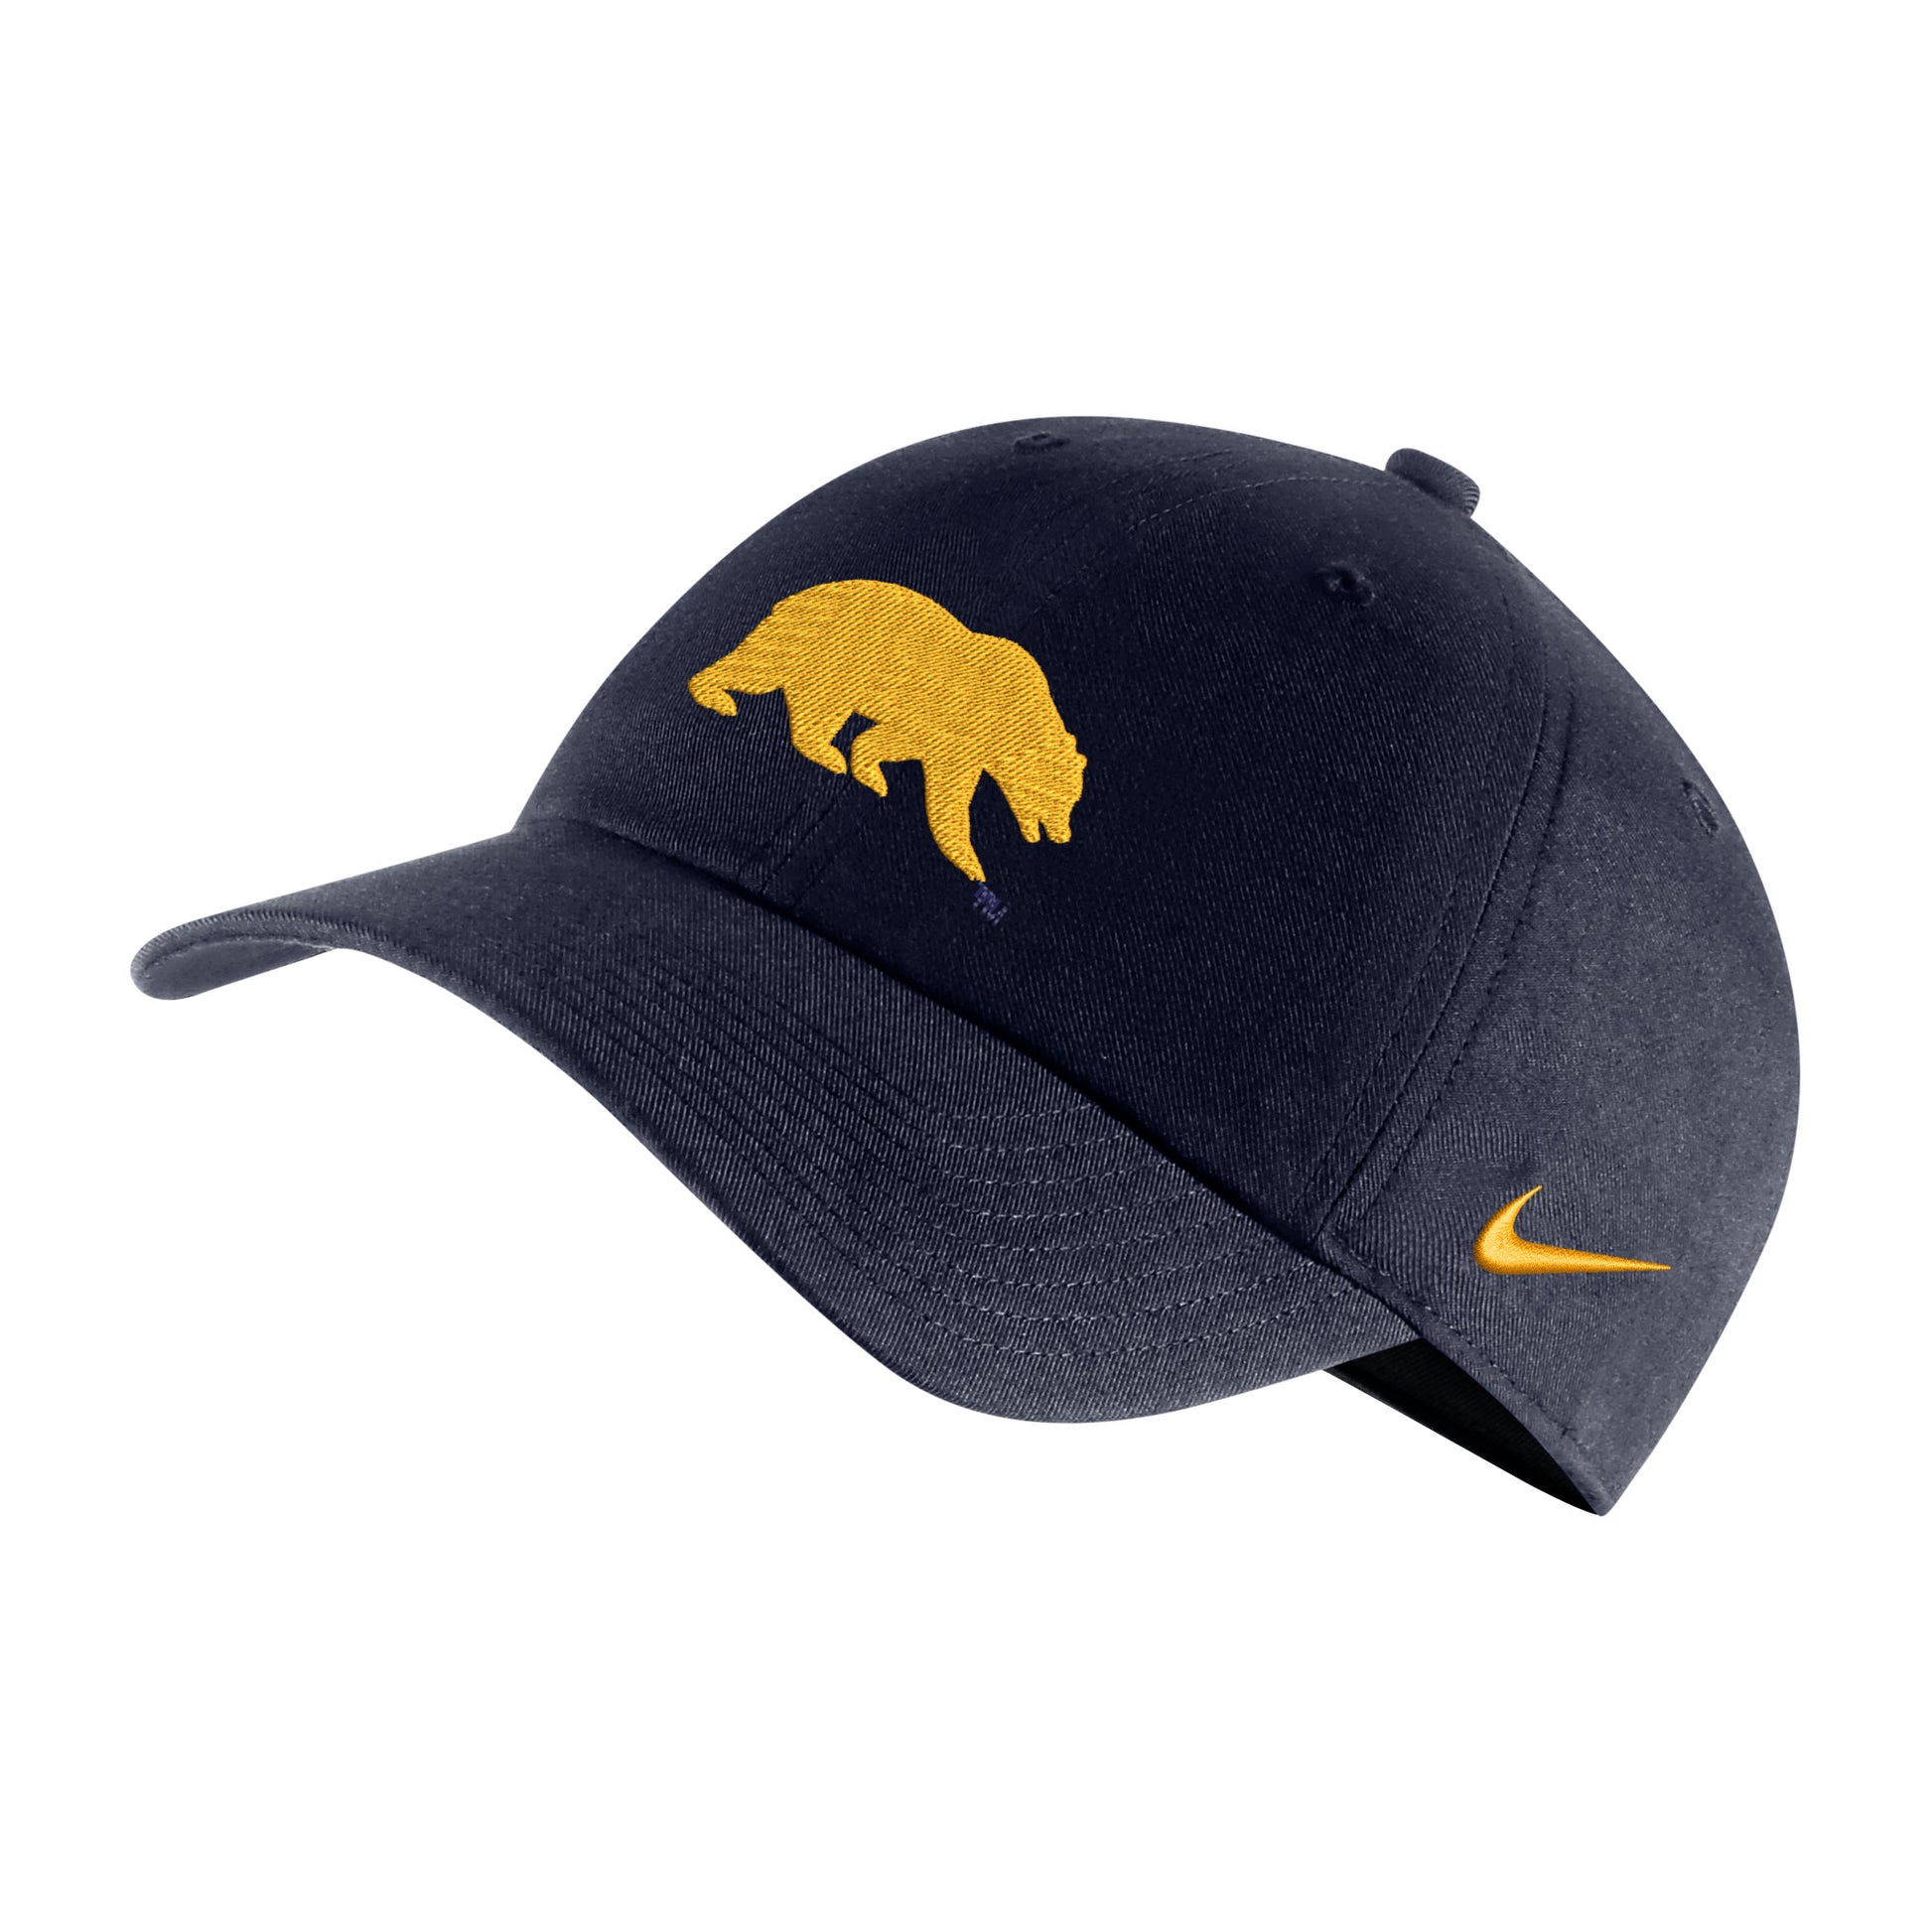 U.C. Berkeley Cal Berkeley arch & Nike swoosh campus hat-Navy-Shop College Wear